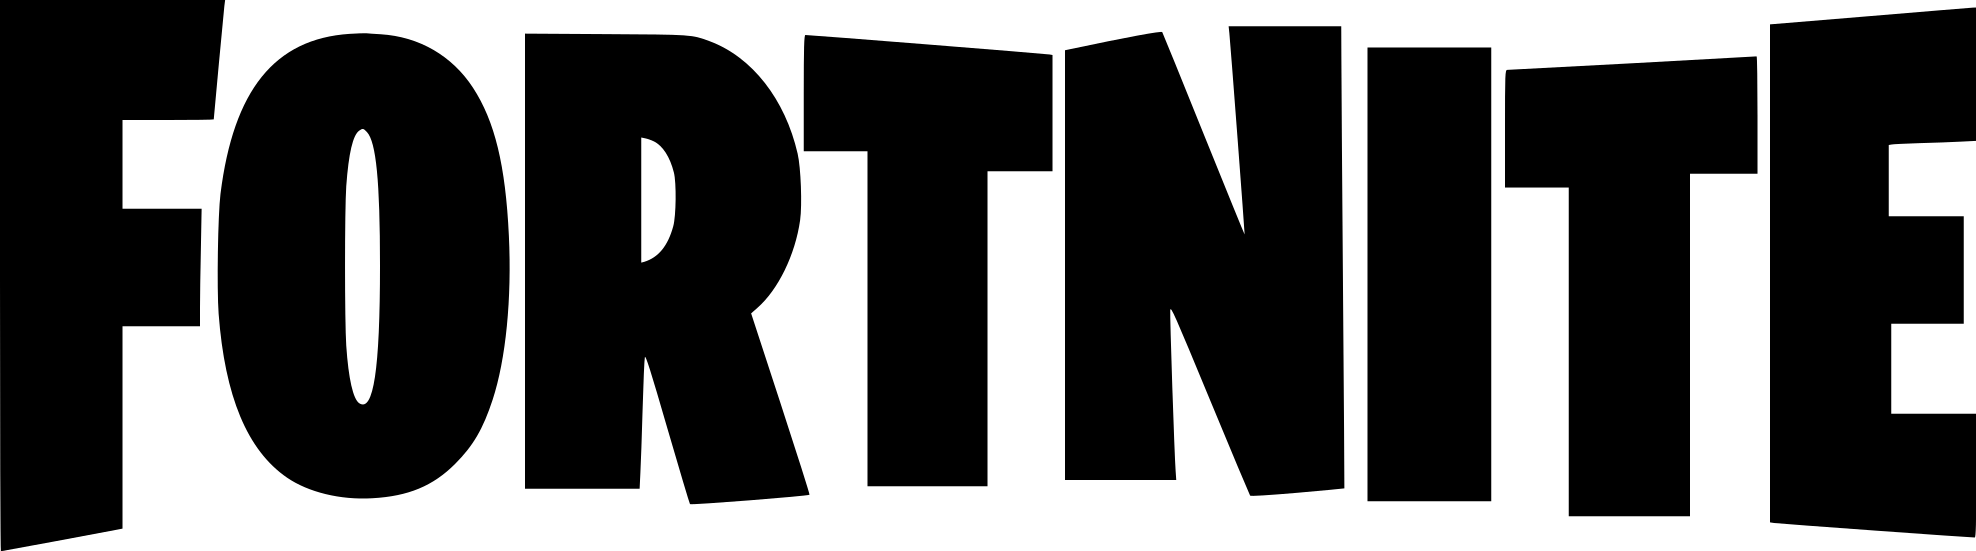 fortnite clipart logo